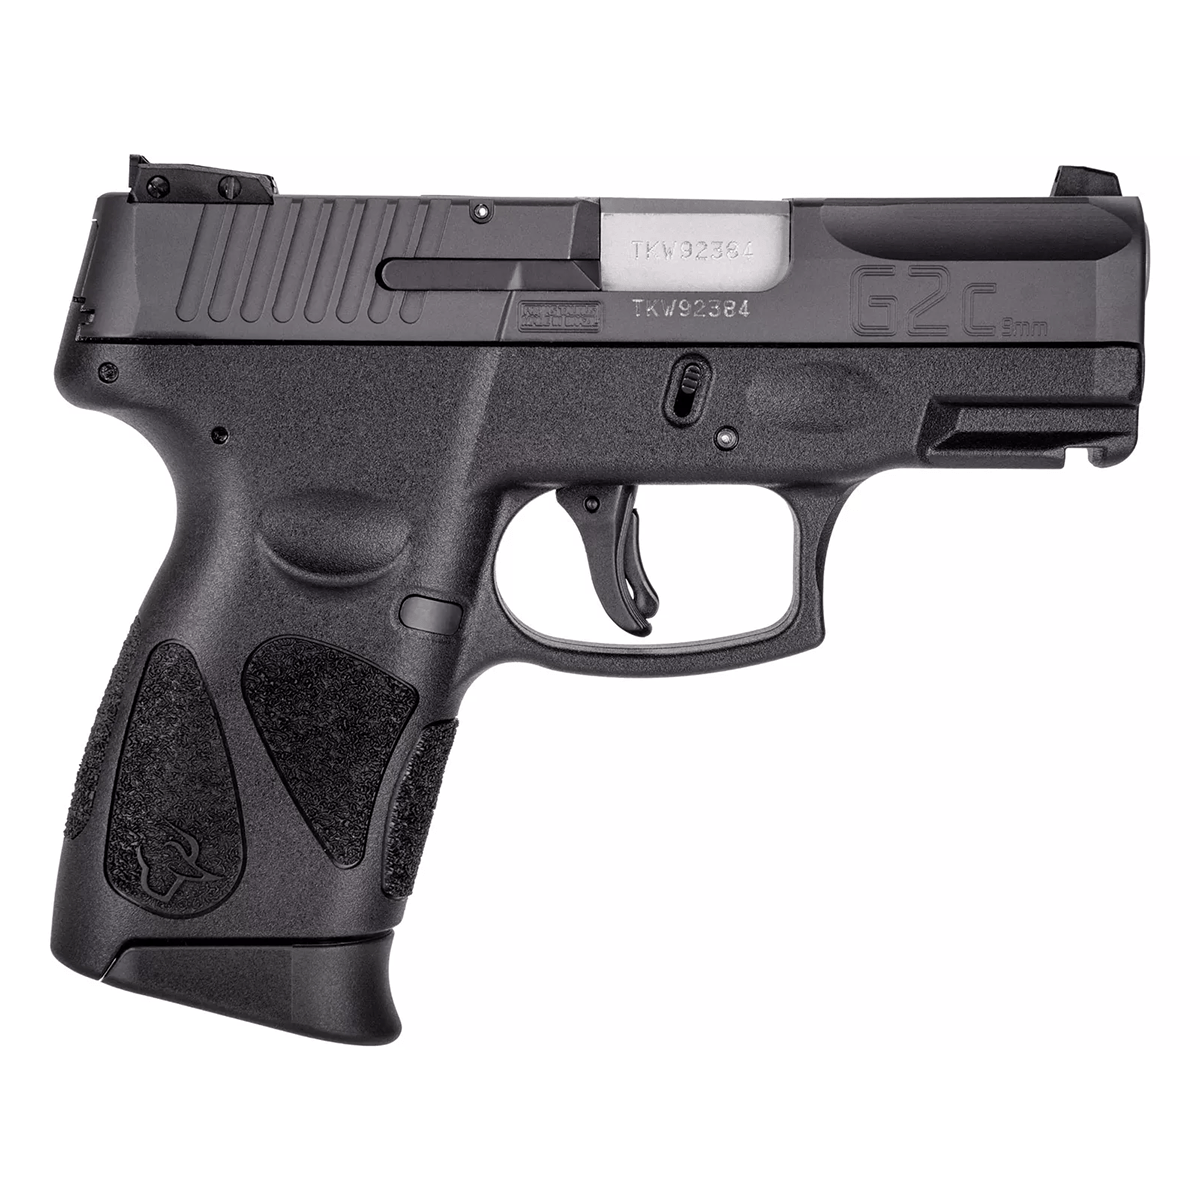 Taurus PT111 G2C 9mm Compact Pistol